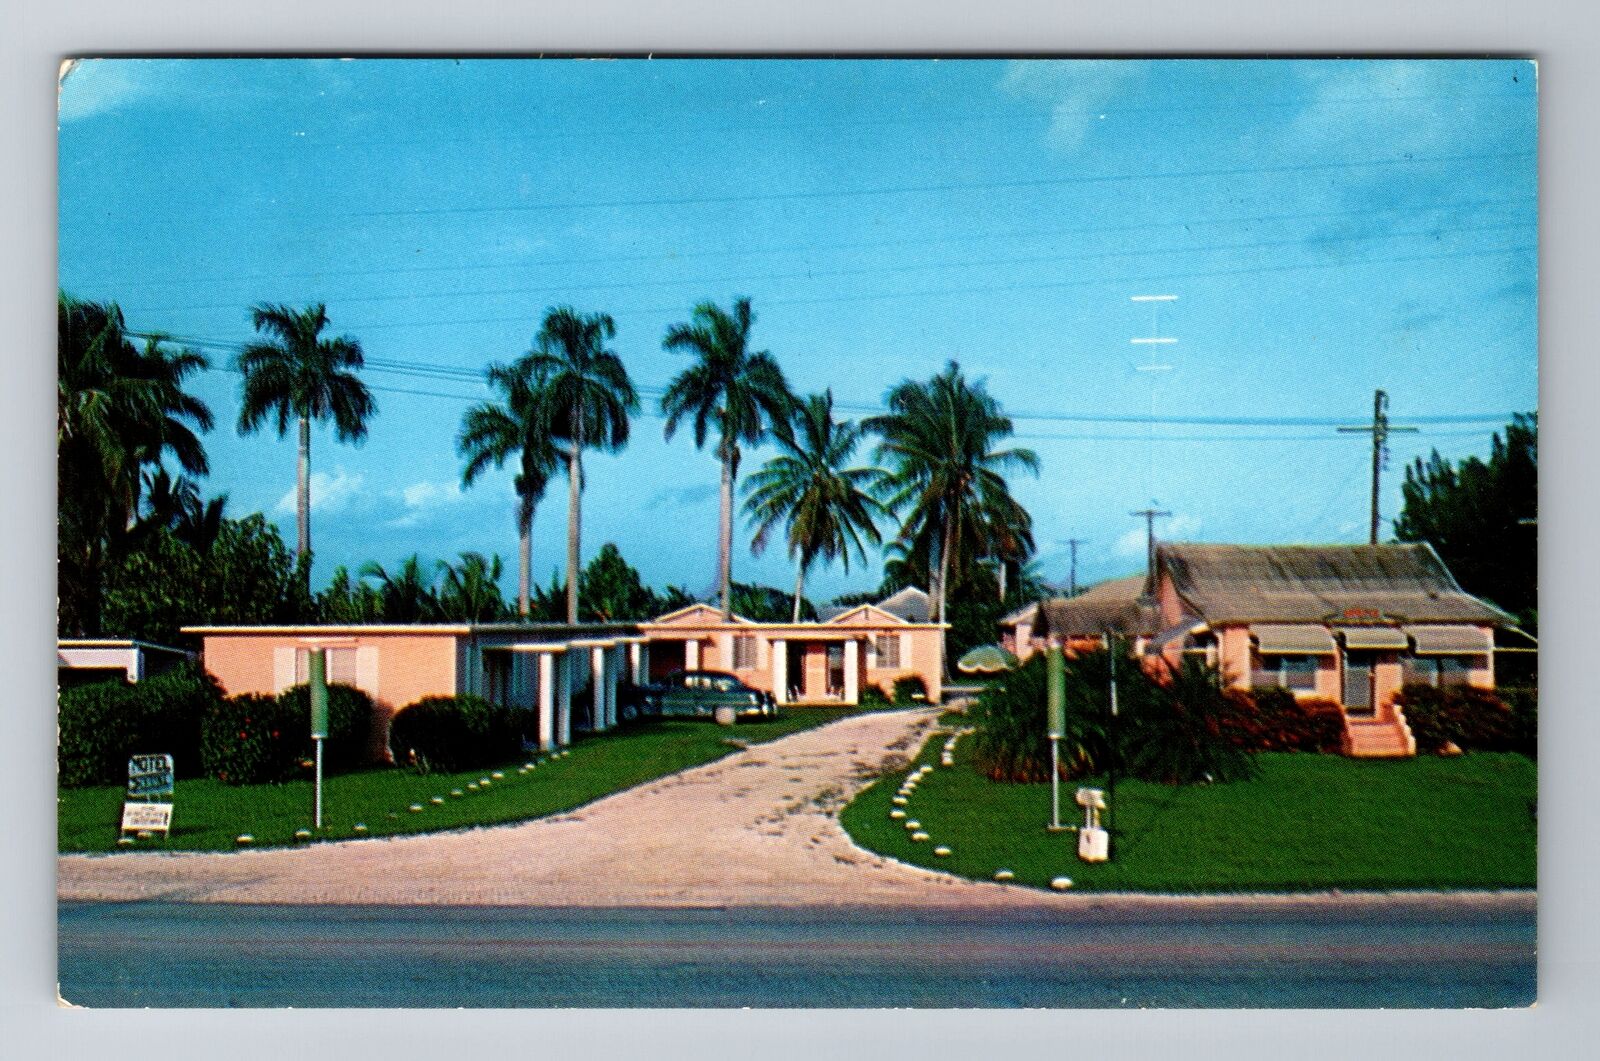 Florida City, FL-Florida, Keys Way Motel Cottages Advertising, Vintage Postcard